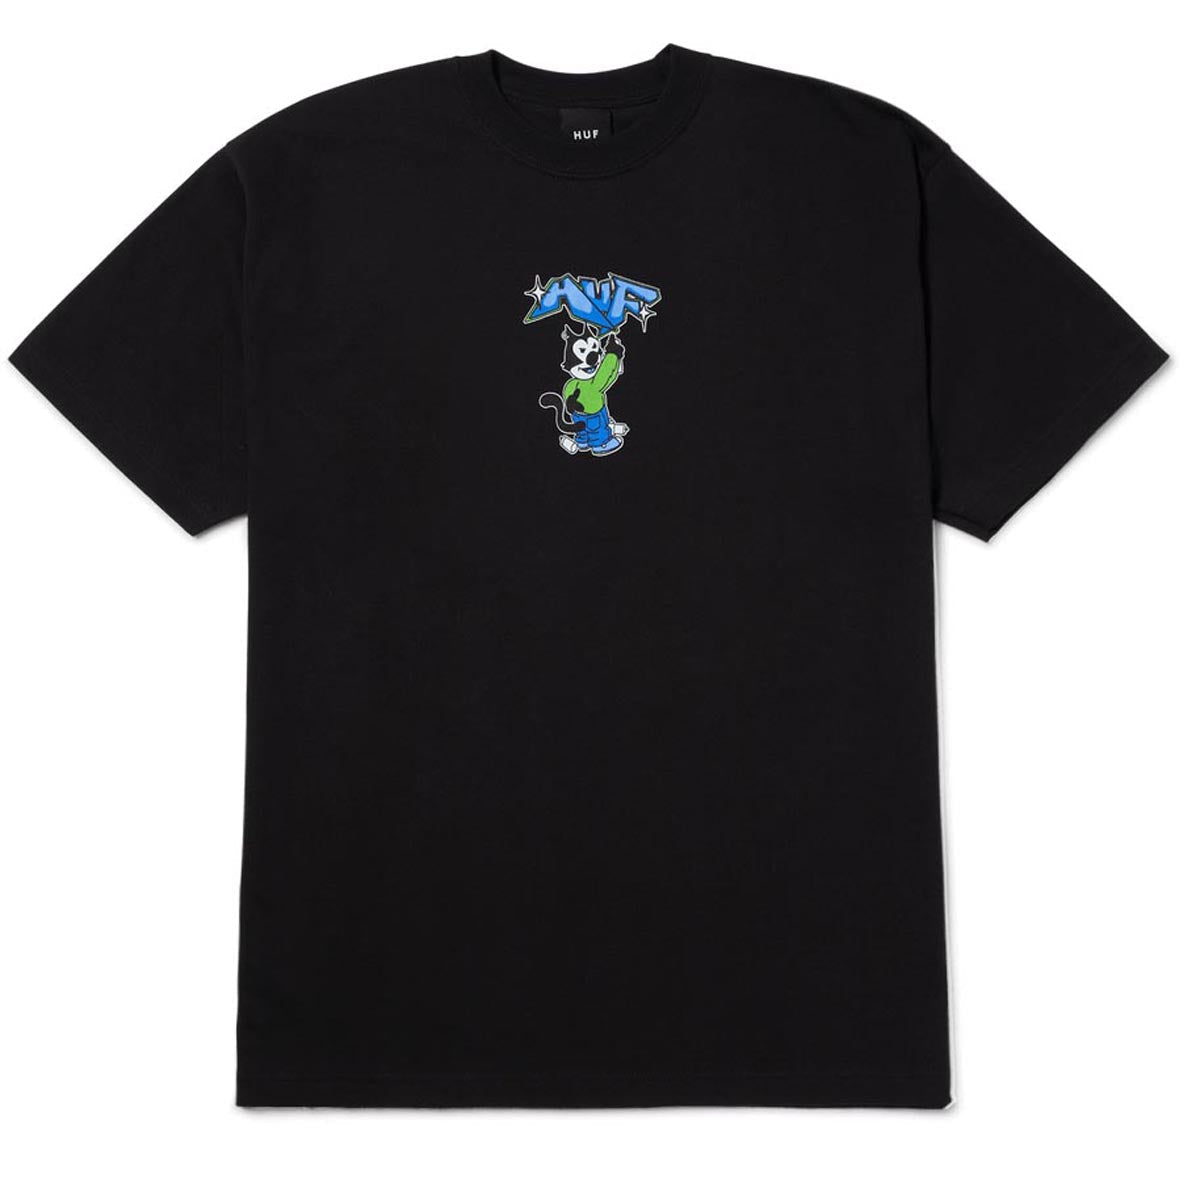 HUF Bad Cat T-Shirt - Black image 1